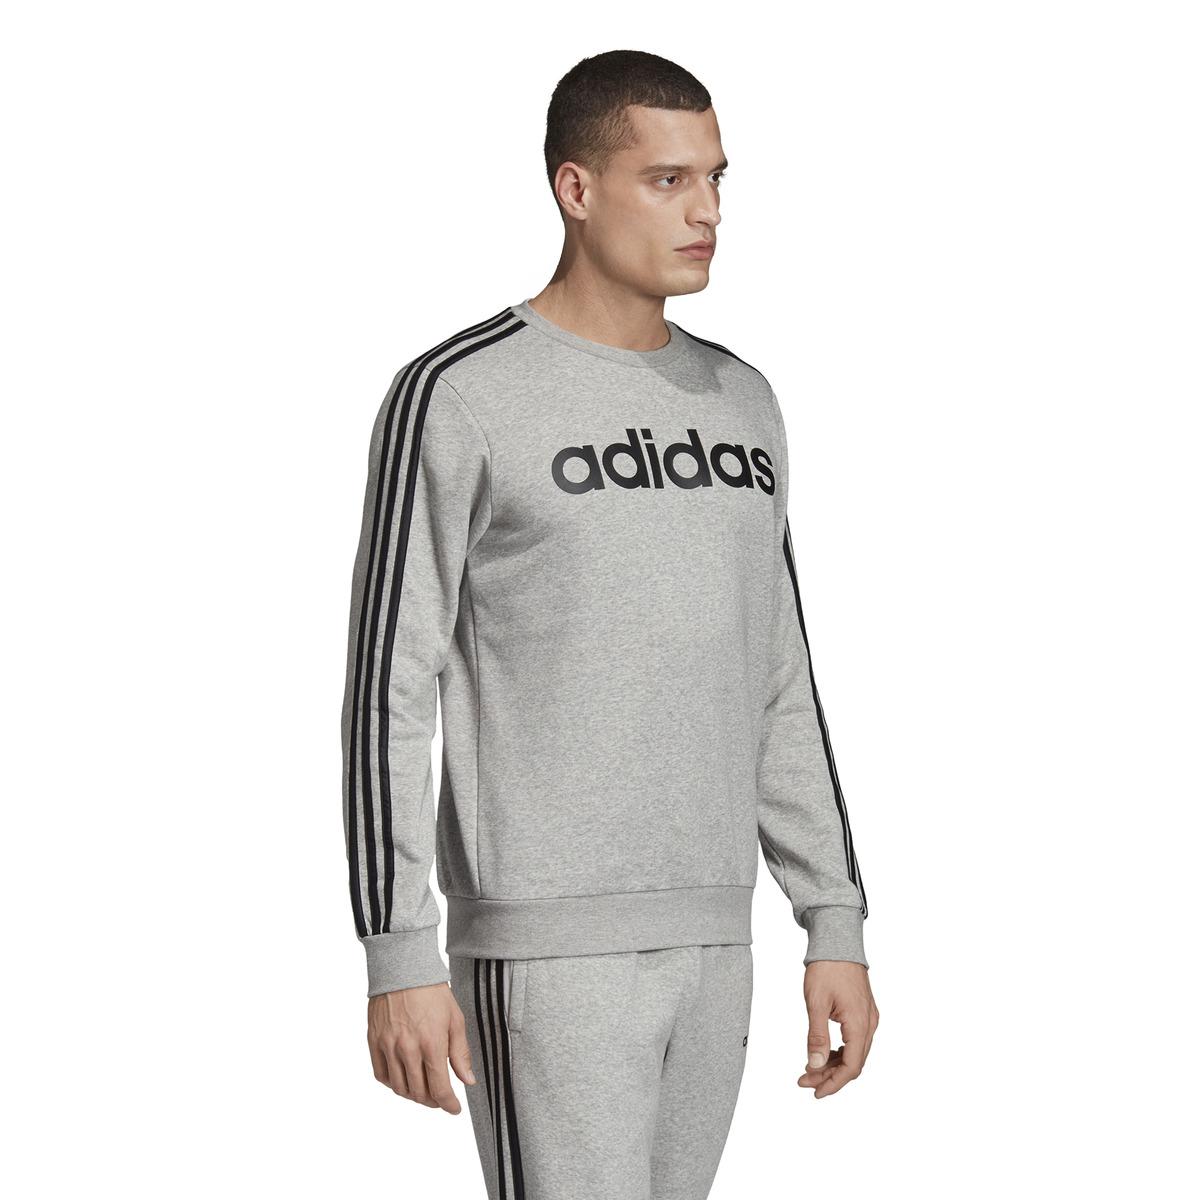 adidas Essentials 3 Stripe Sweatshirt in Grey (Gray) for Men - Lyst